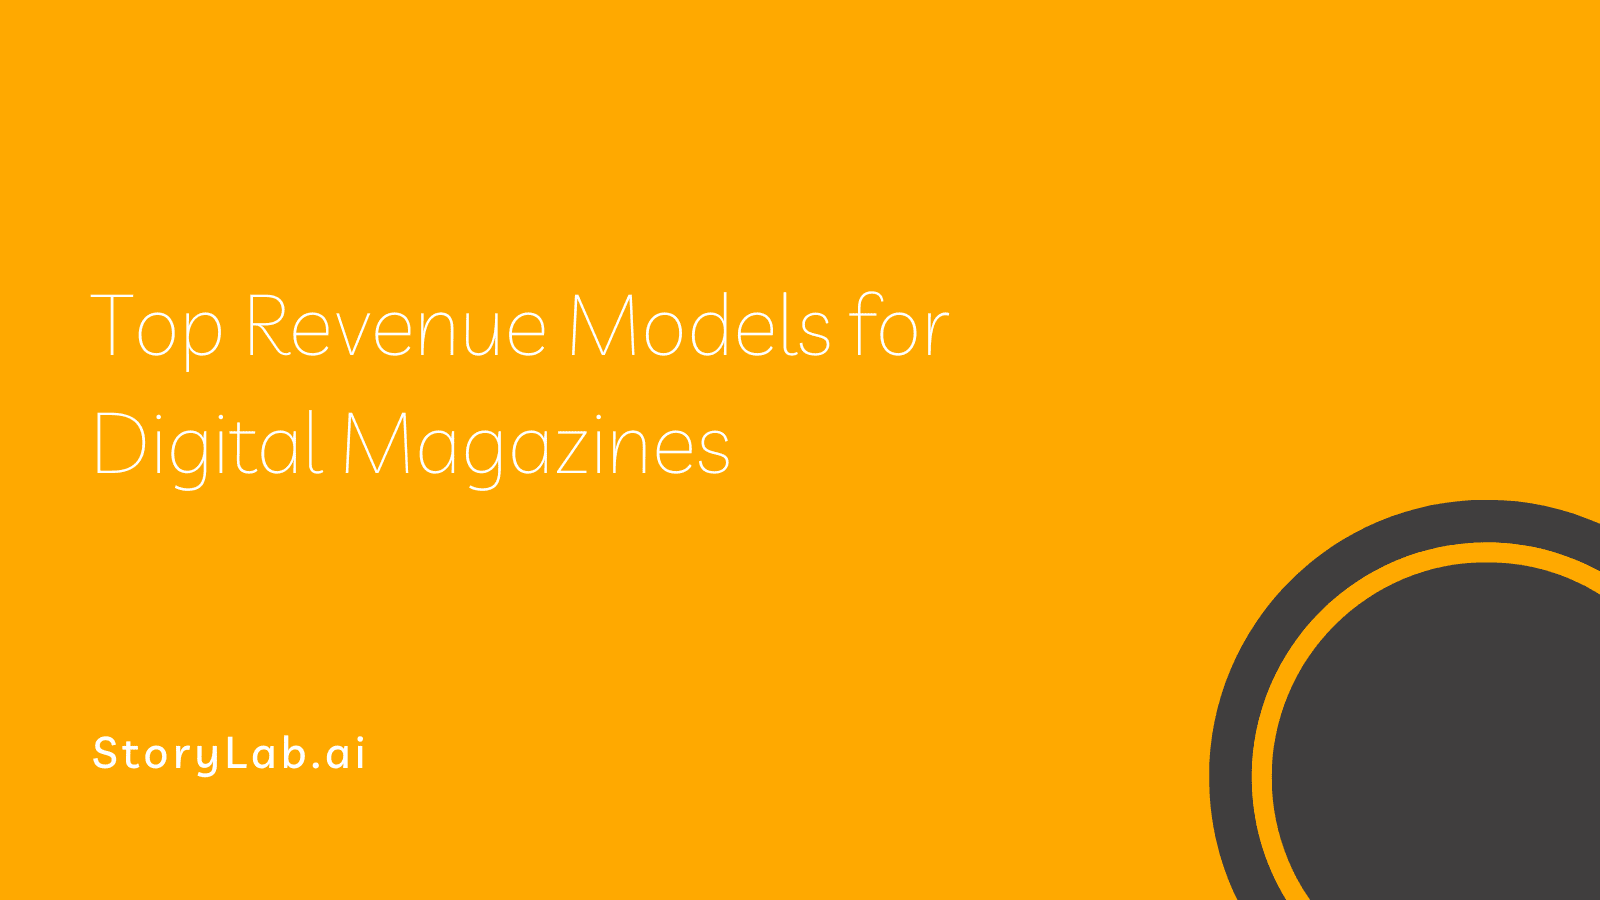 Top Revenue Models for Digital Magazines